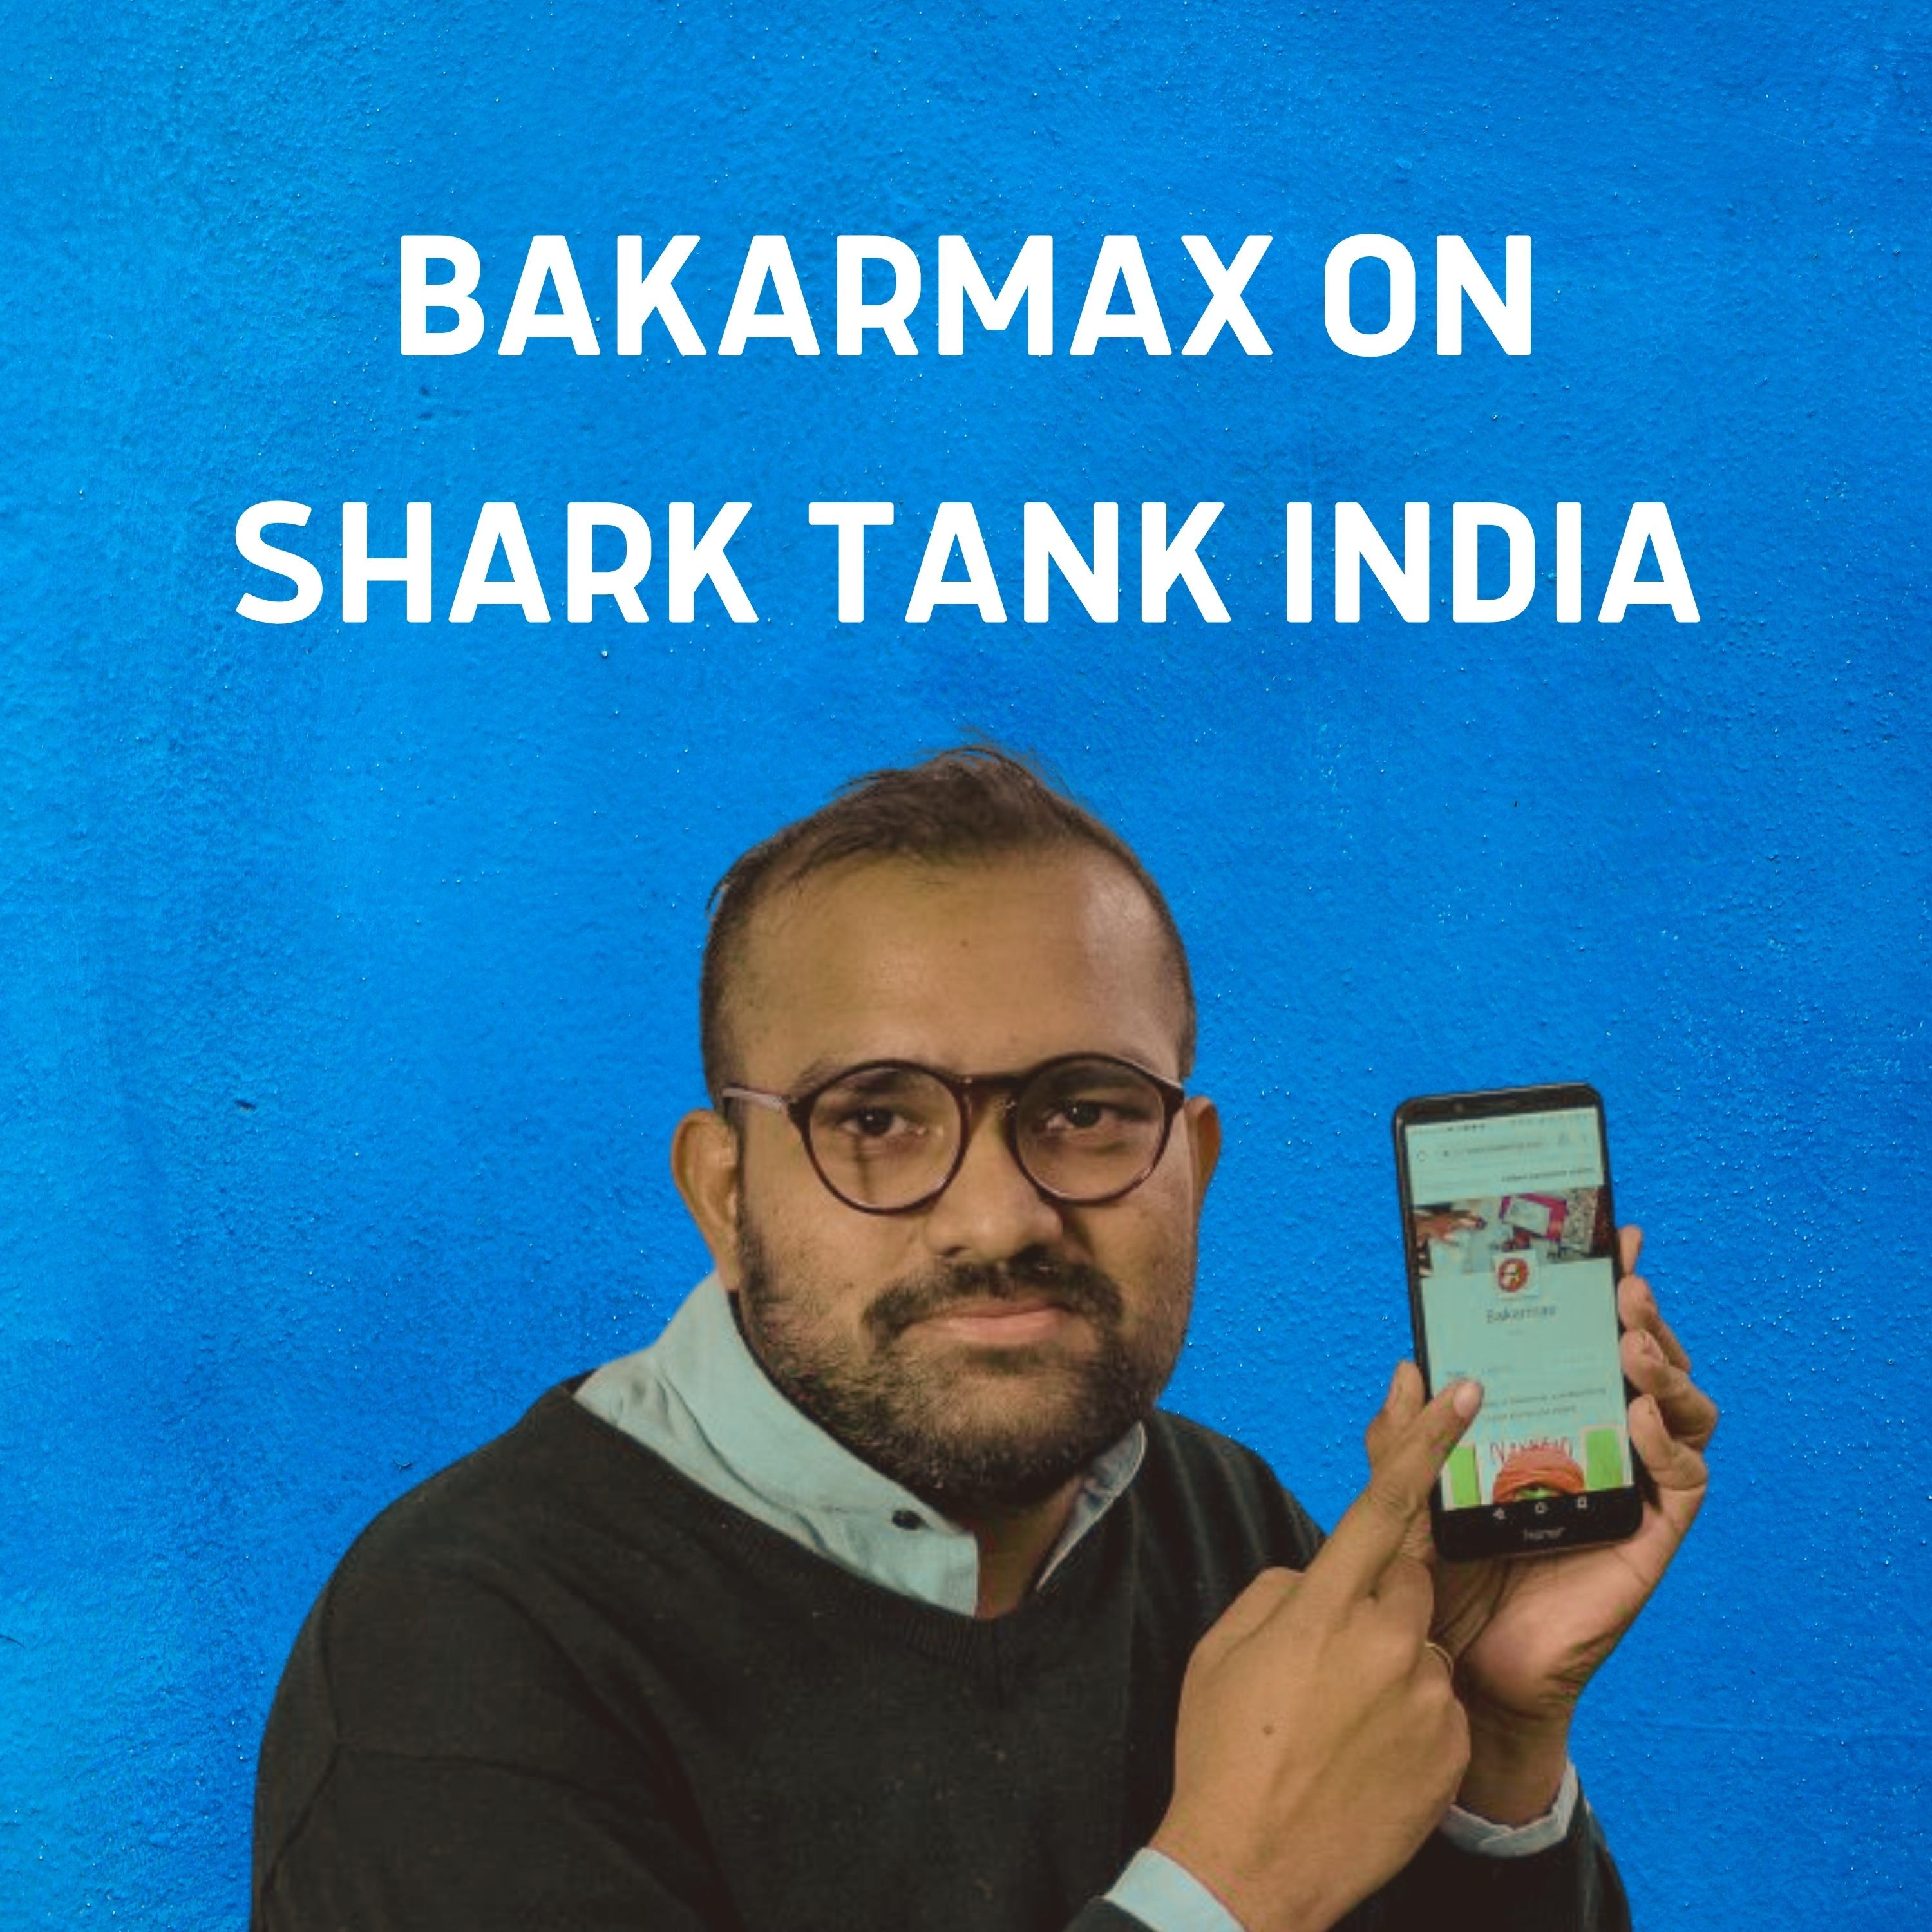 Cartoonist Sumit Kumar on Bakarmax and Shark Tank India